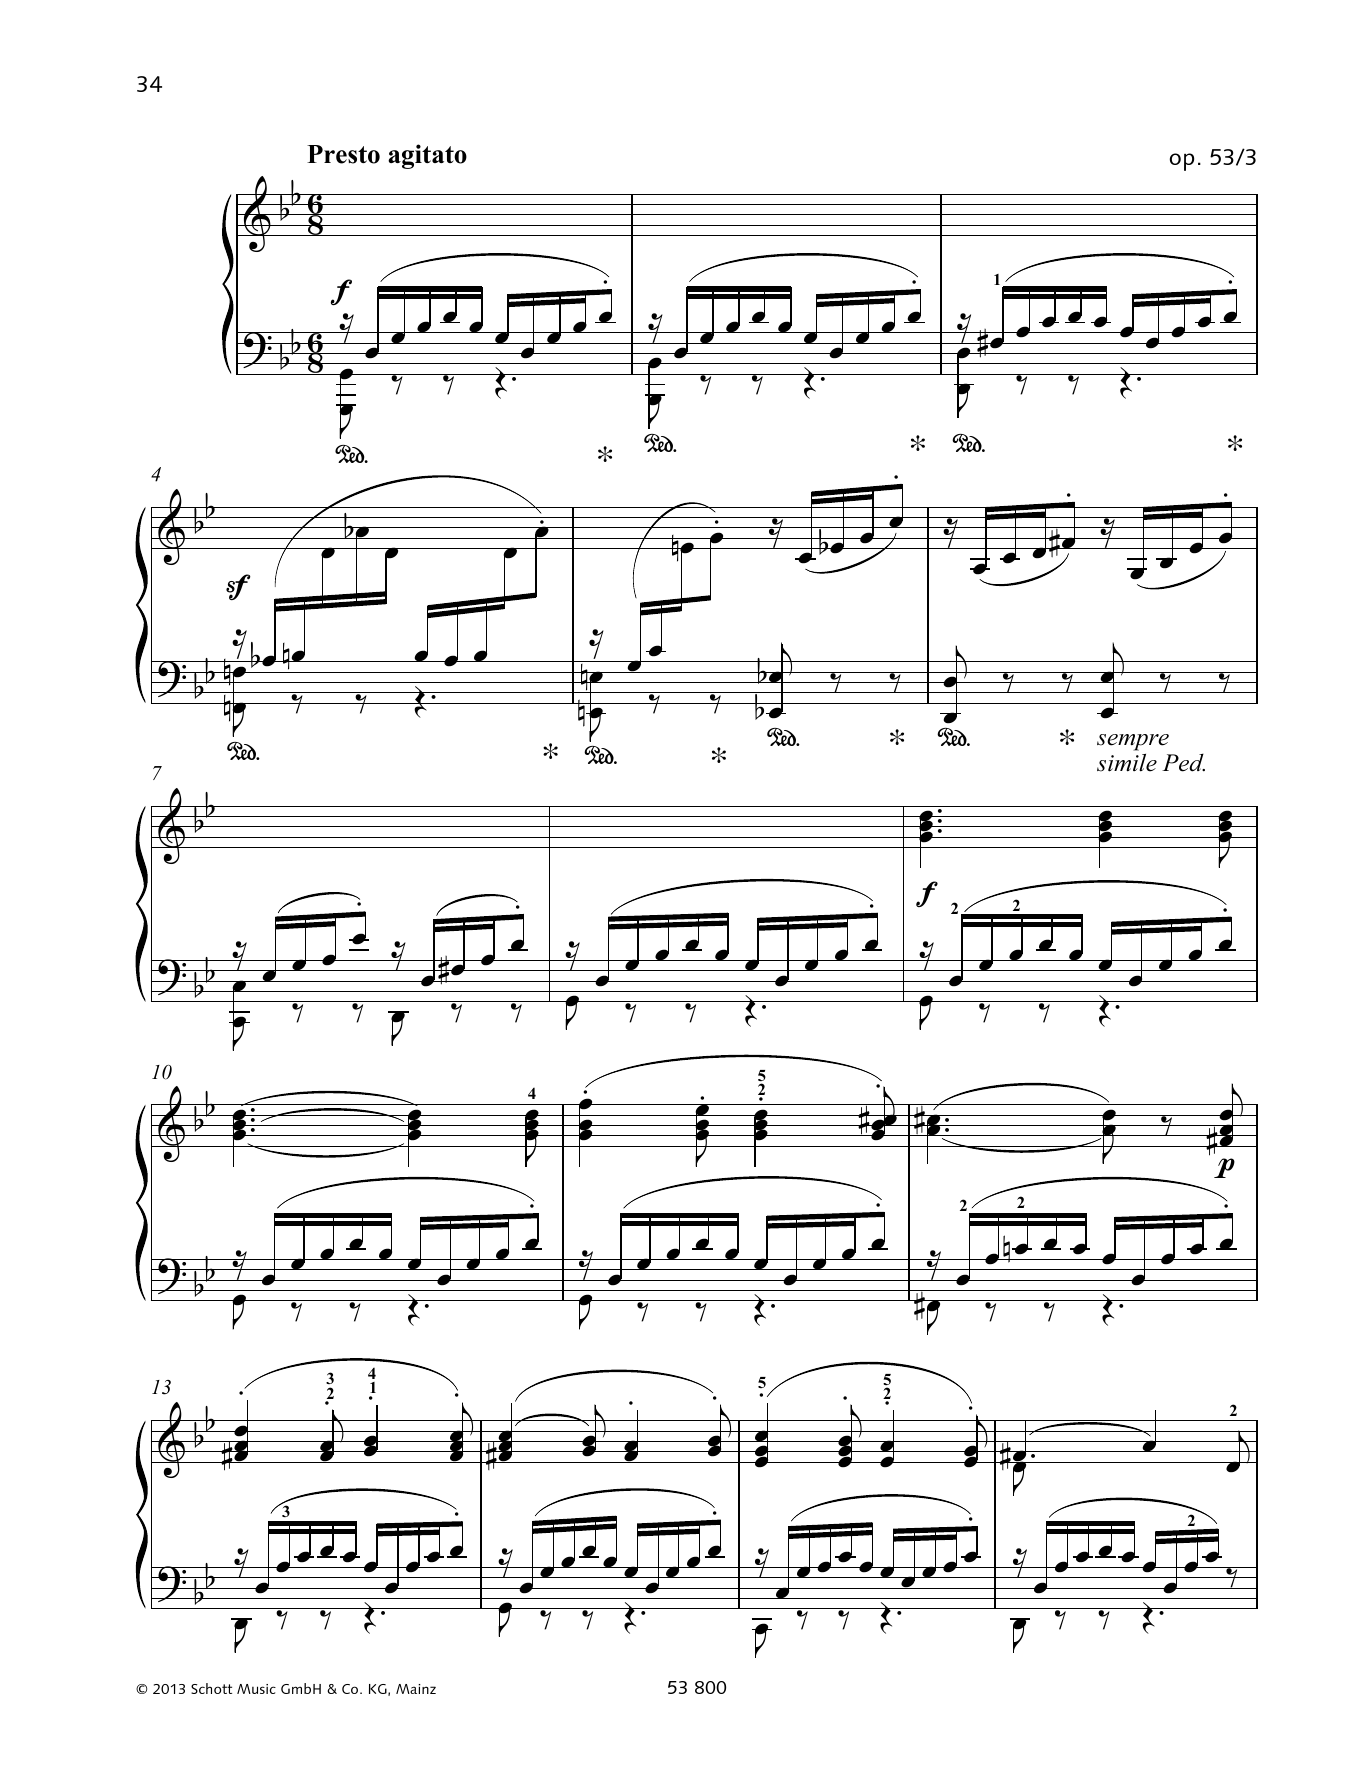 Felix Mendelssohn Bartholdy Presto Agitato Sheet Music Notes & Chords for Piano Solo - Download or Print PDF